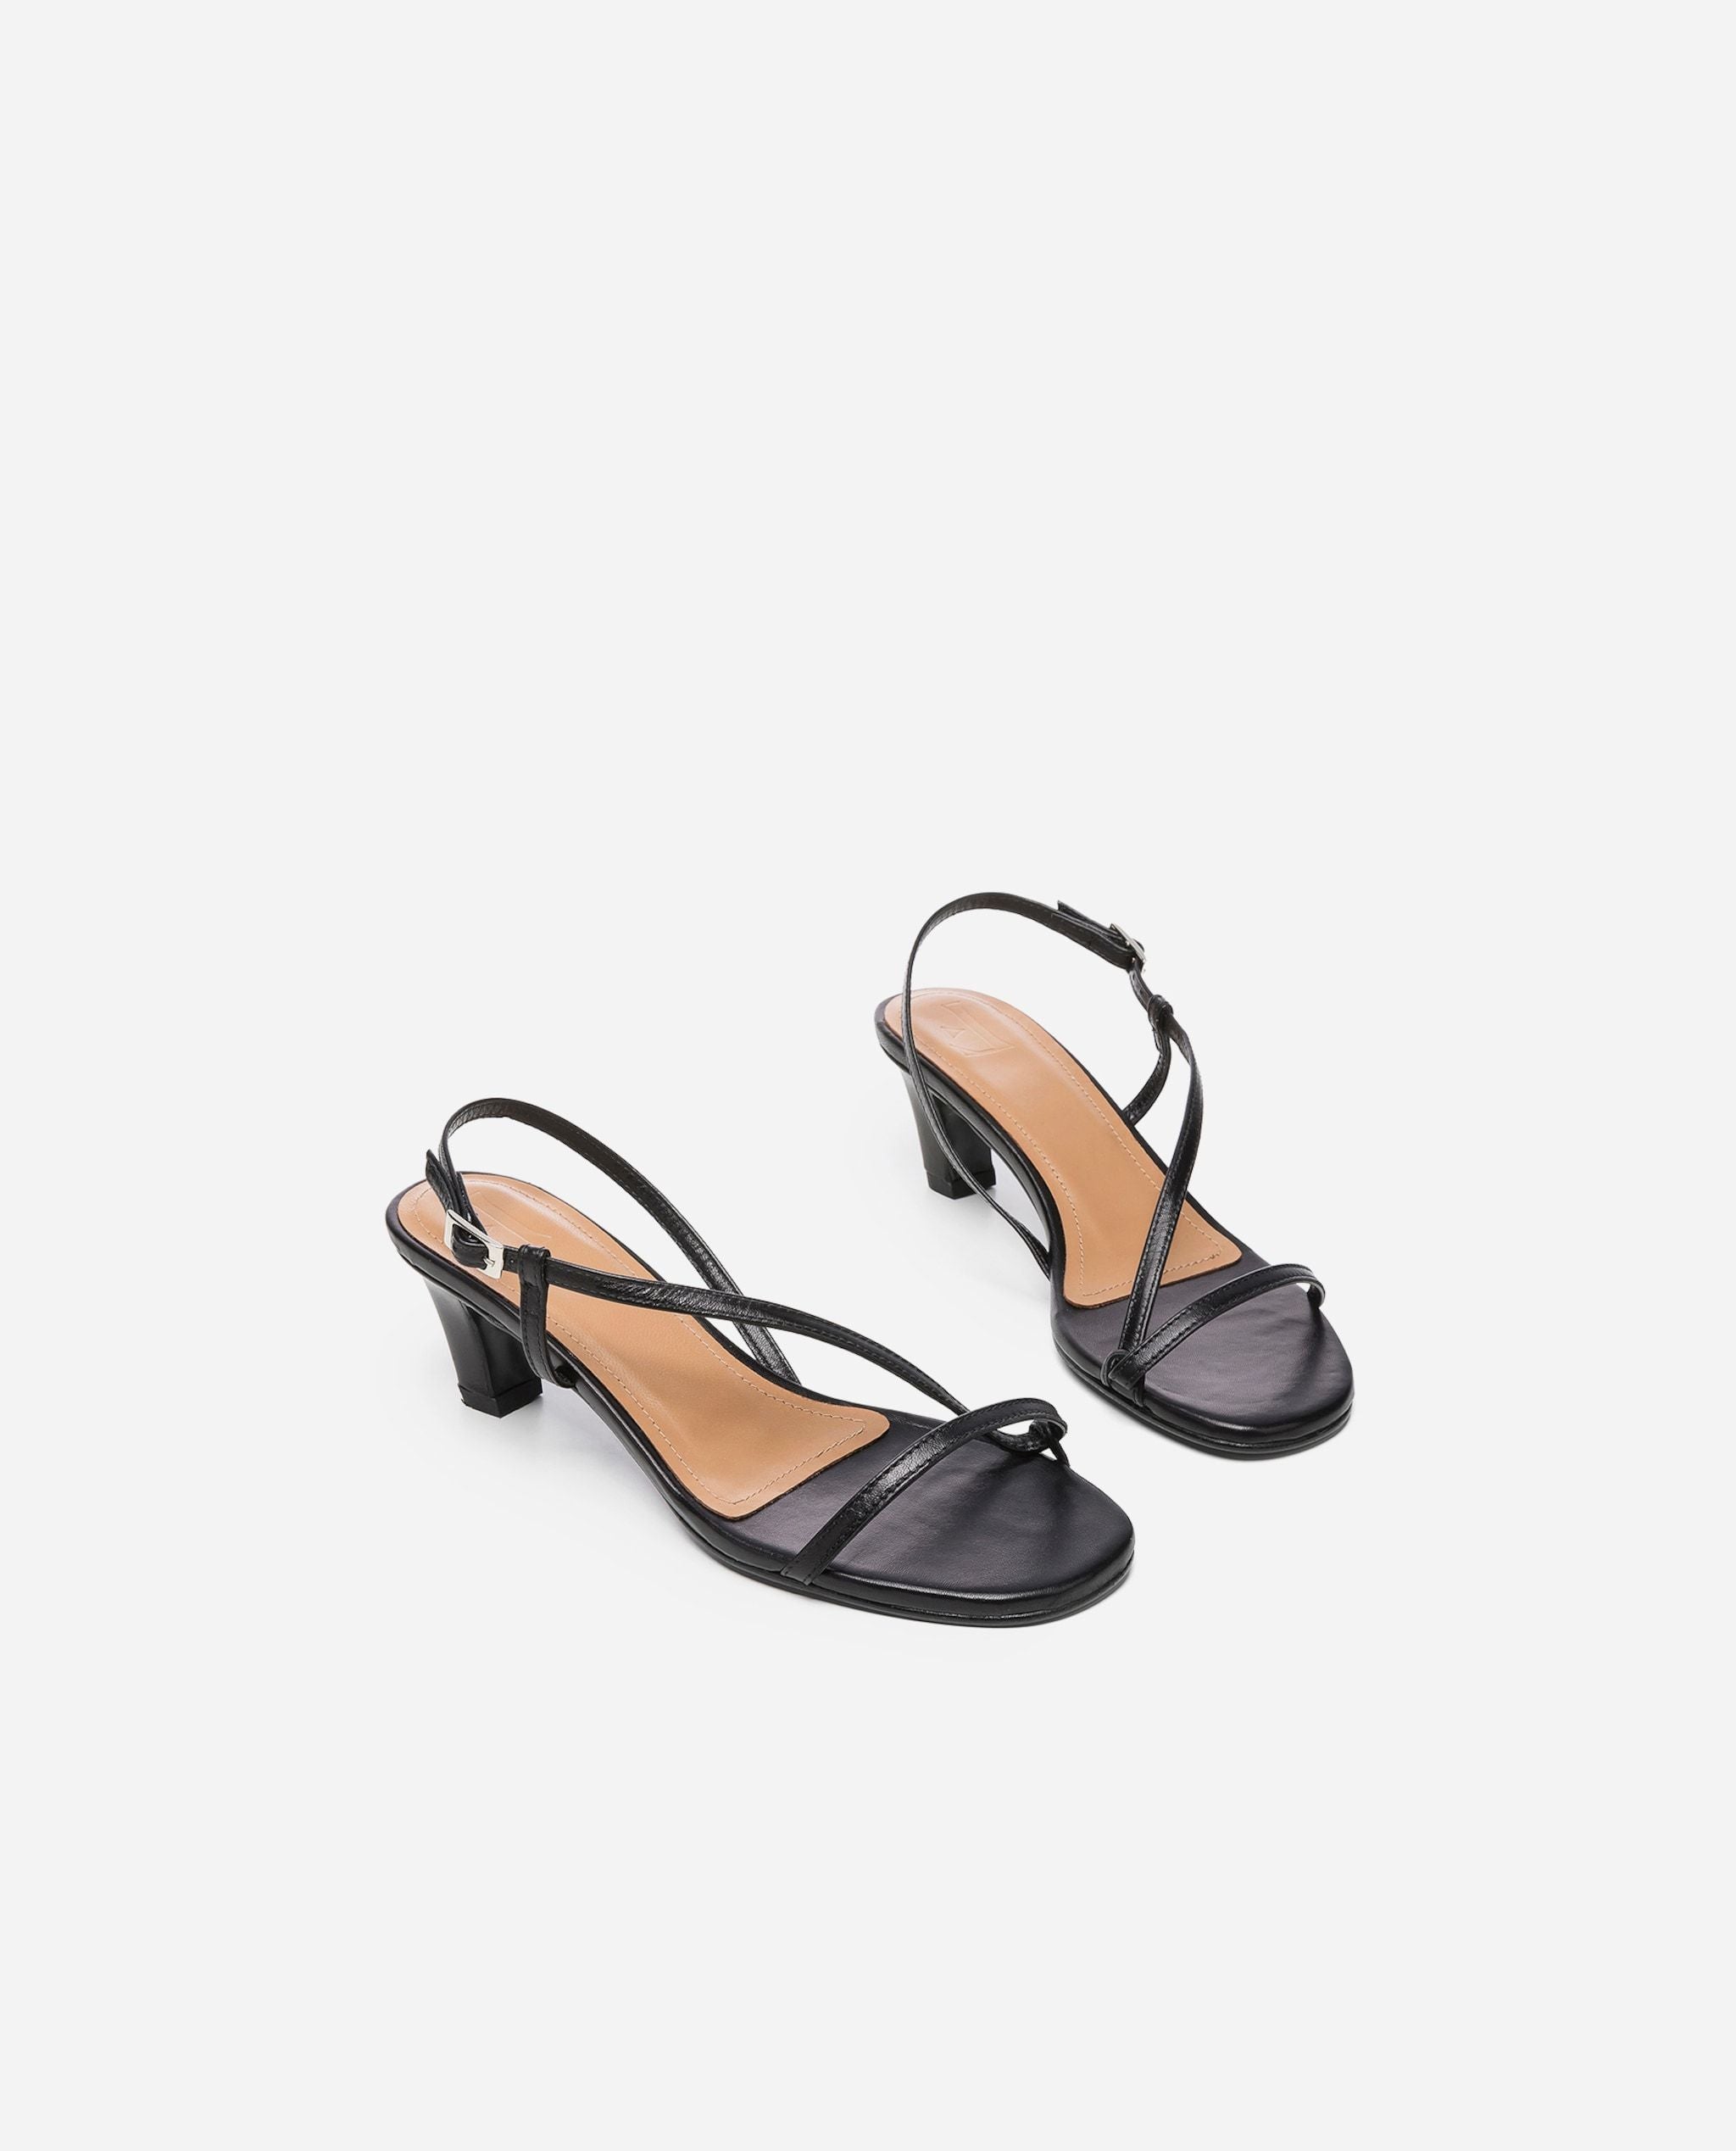 Emma Leather Black Heeled Sandals 20010411501-001 - 2